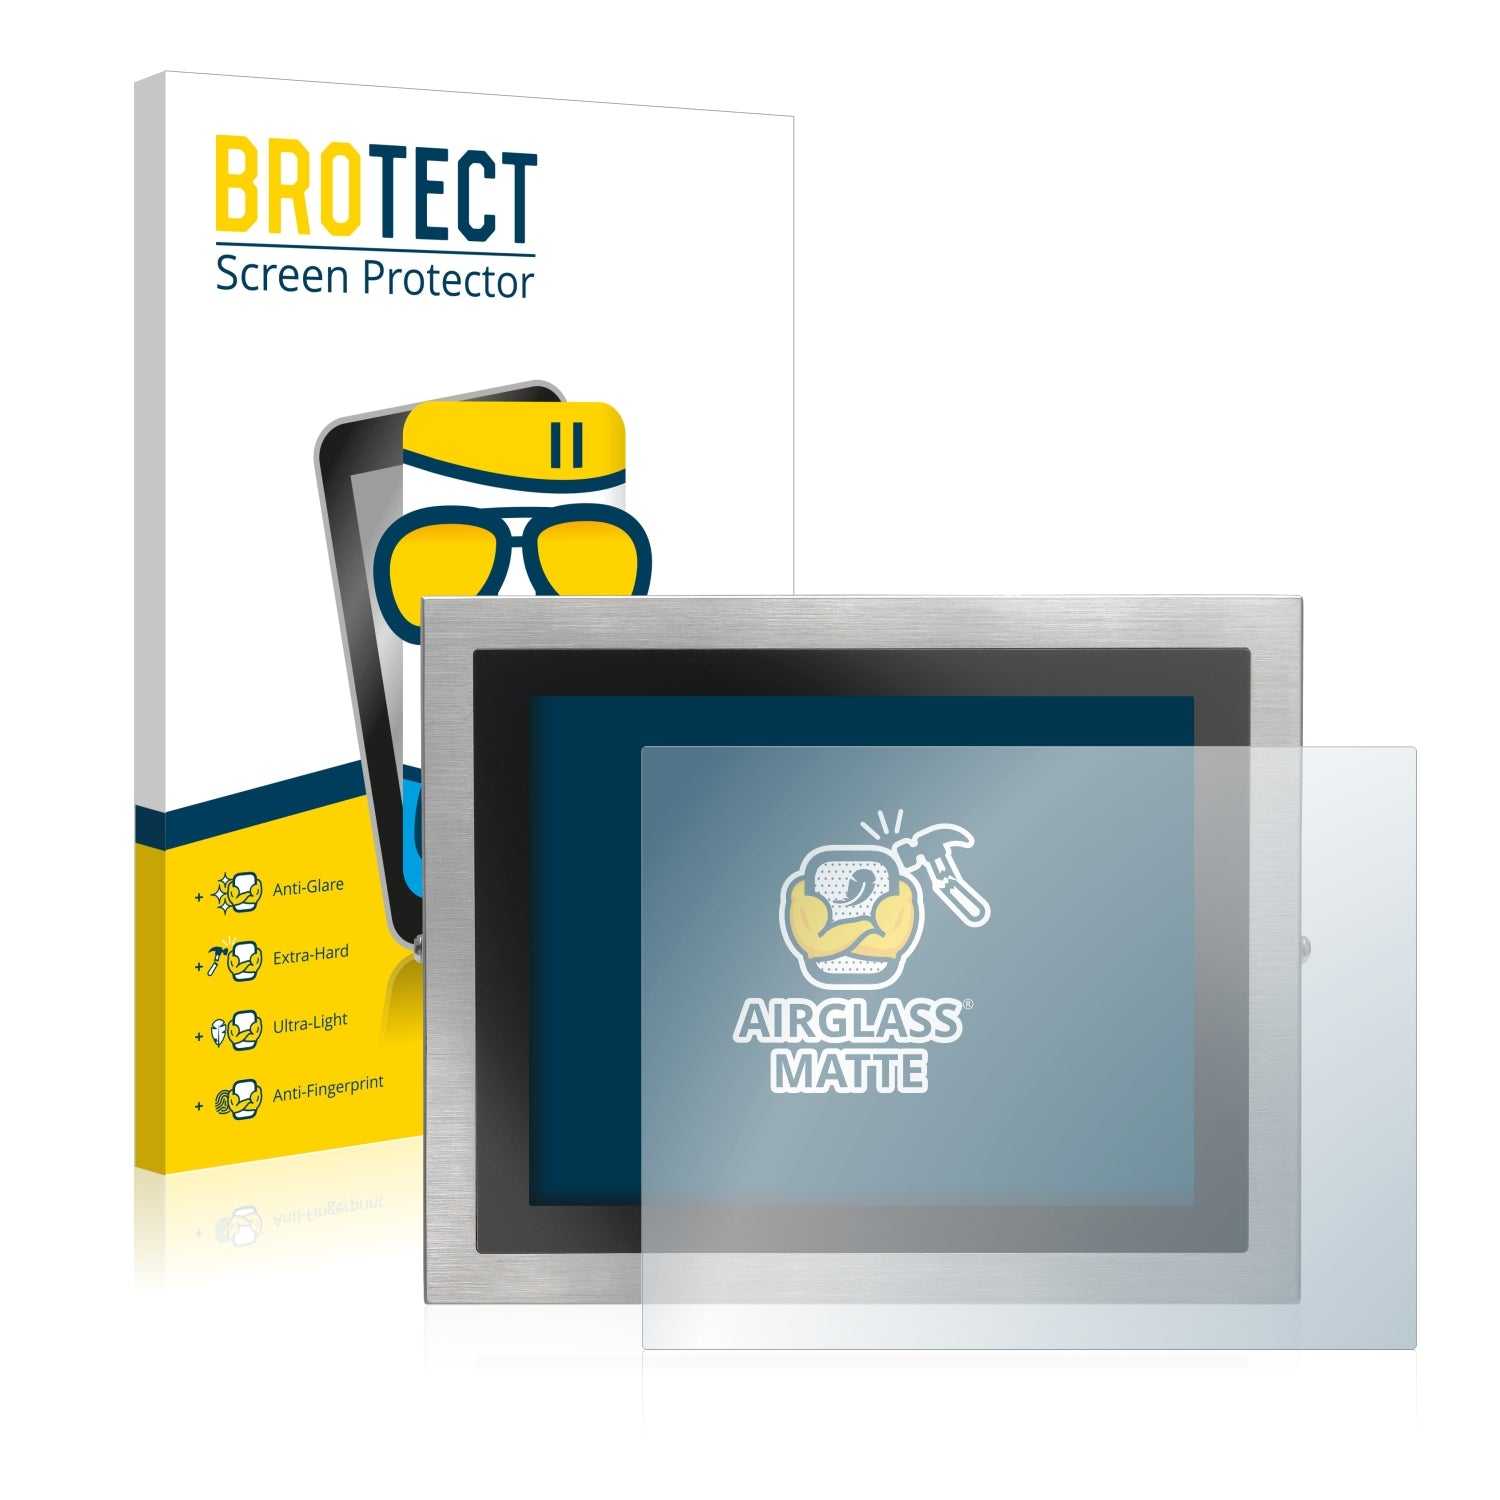 ScreenShield, Anti-Glare Screen Protector for Wincomm Hygrolion 106B 10